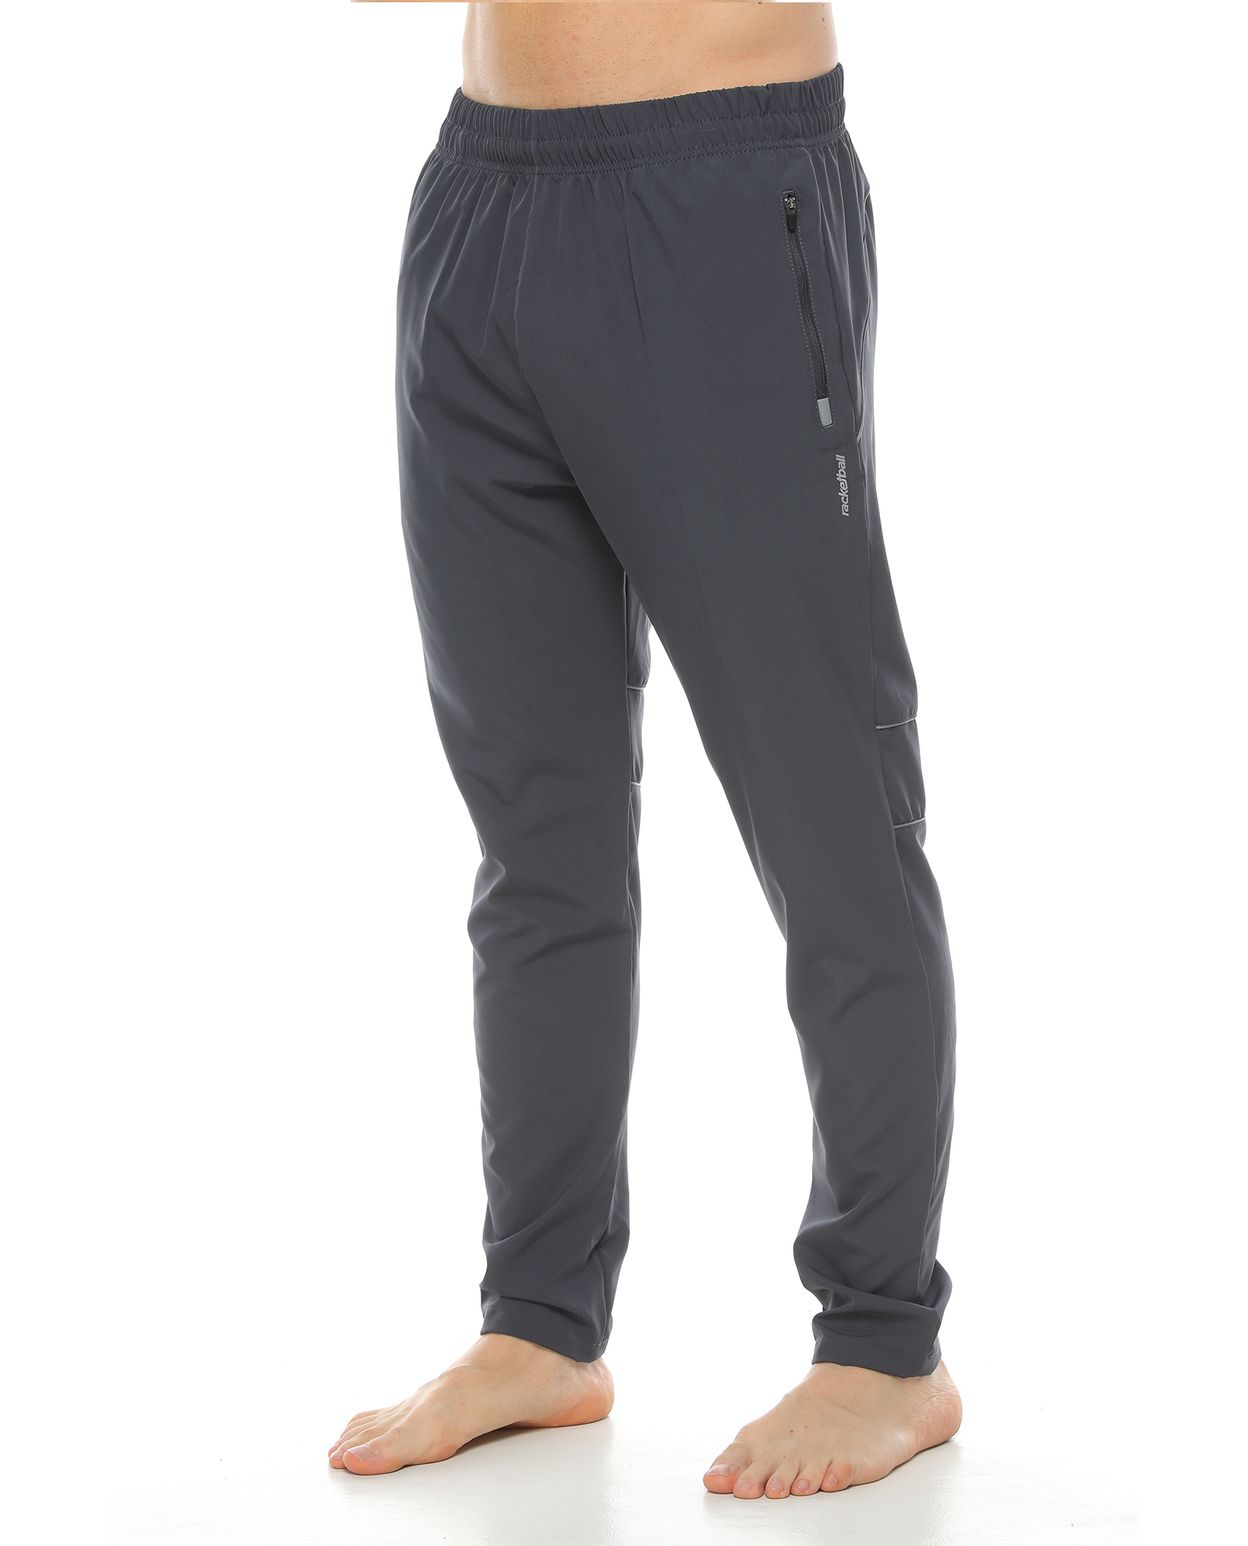 Pantalón deportivo para mujer, color gris oscuro - racketball movil